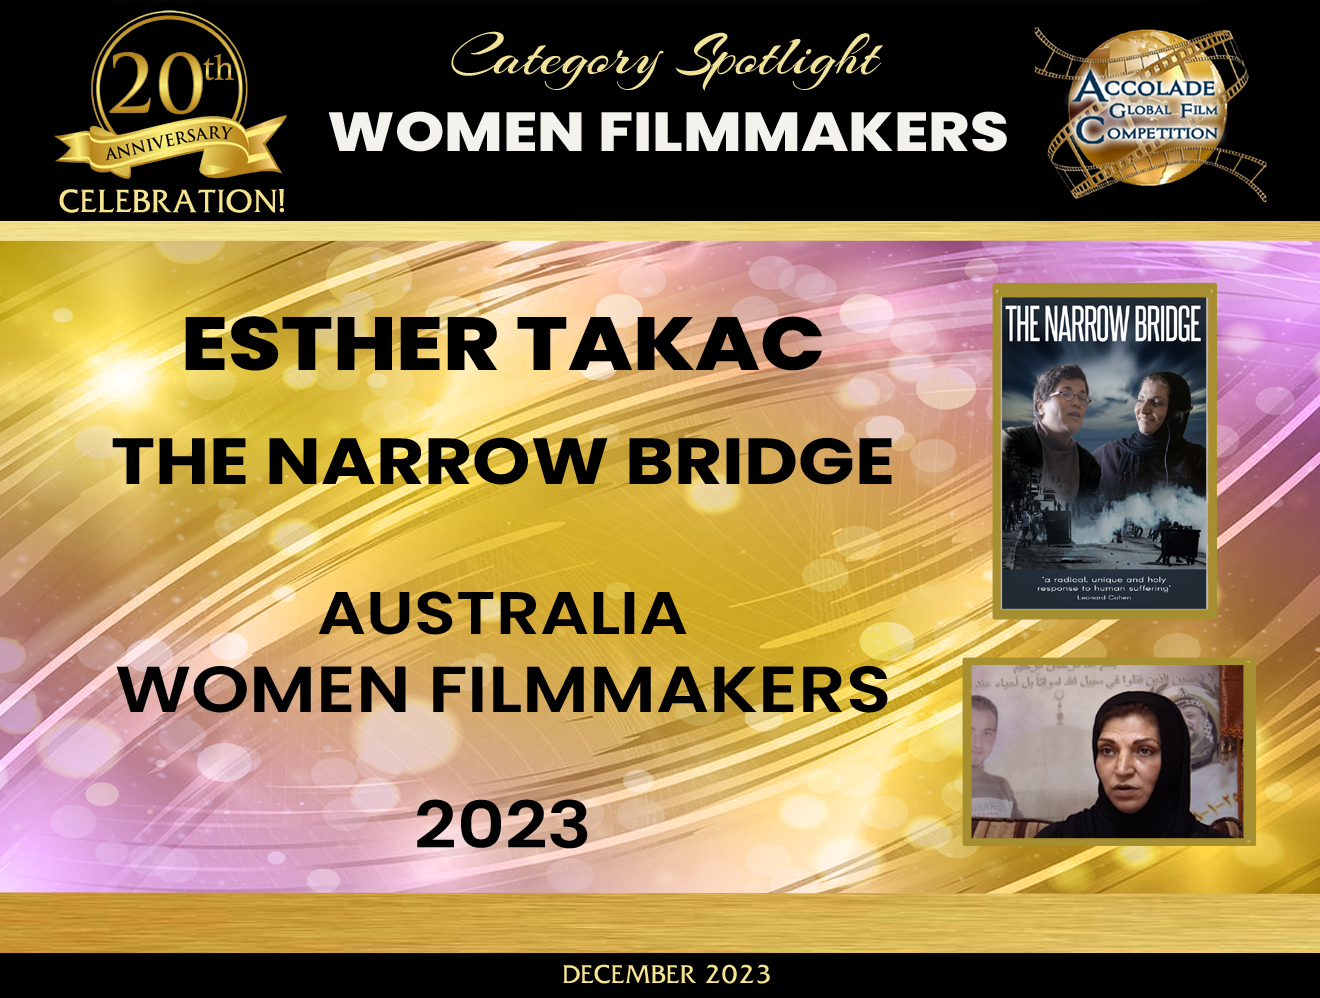 Accolade Global Film Competition Women Filmmaker Spotlight